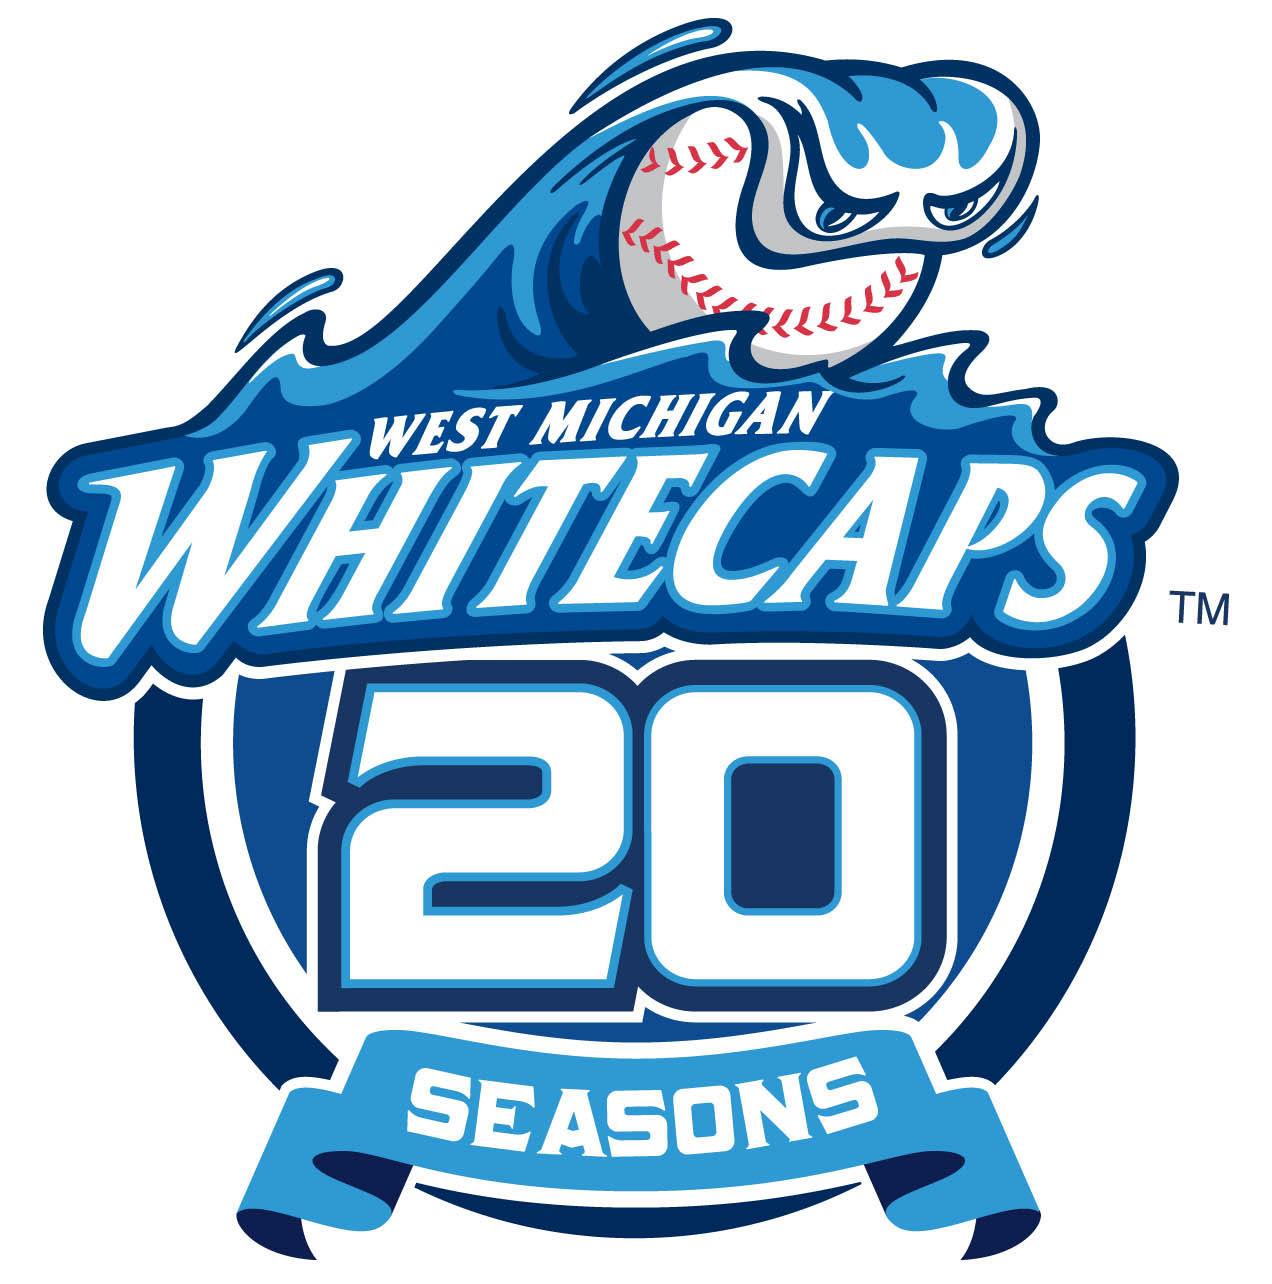 West Michigan Whitecaps 2013 anniversary logo iron on transfers for clothing.jpg